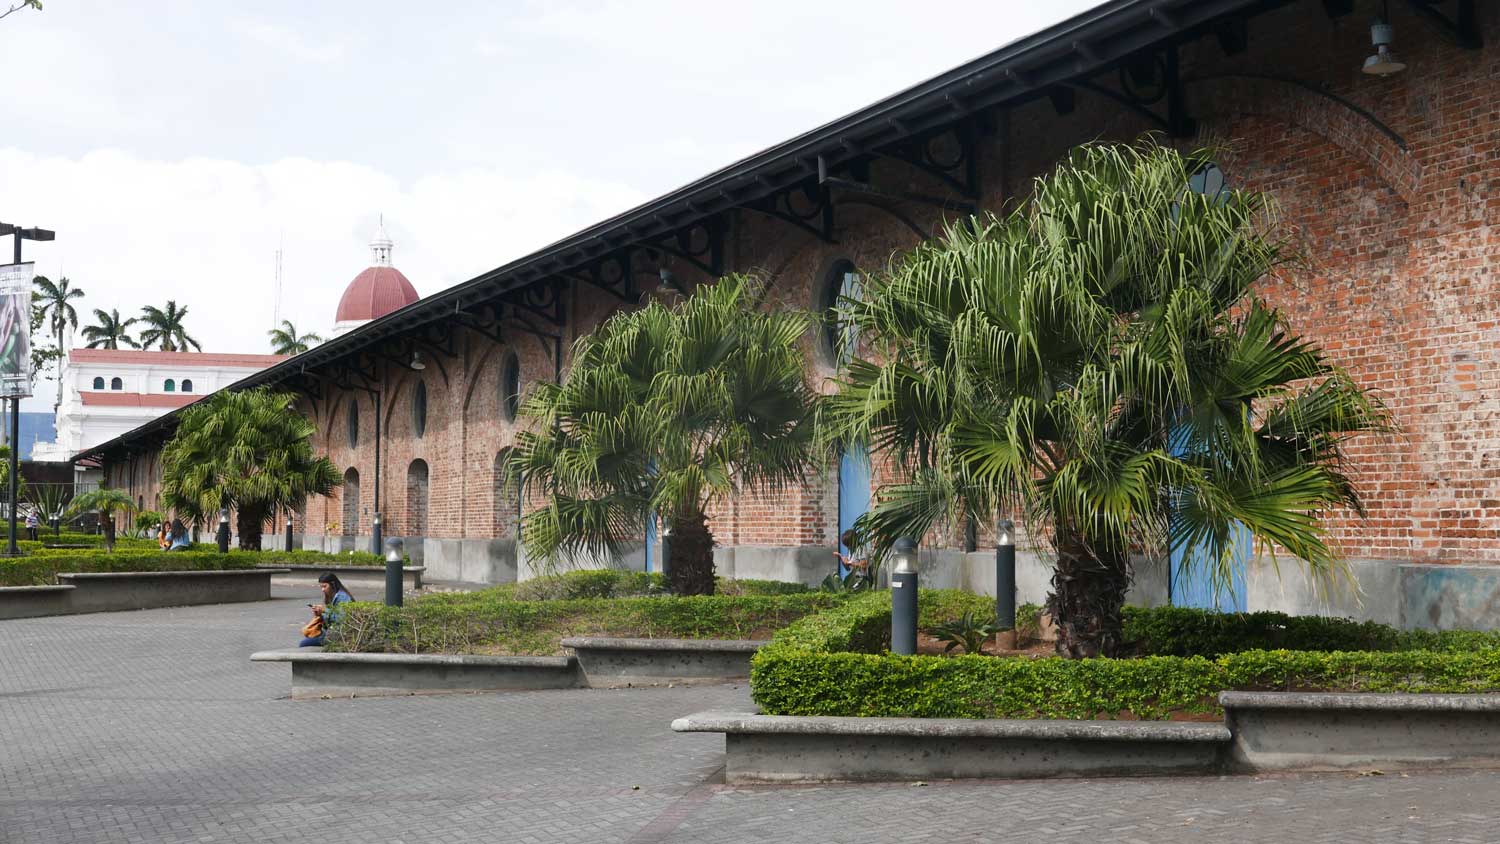 Antigua Aduana building in San Jose, Costa Rica, now a cultural center